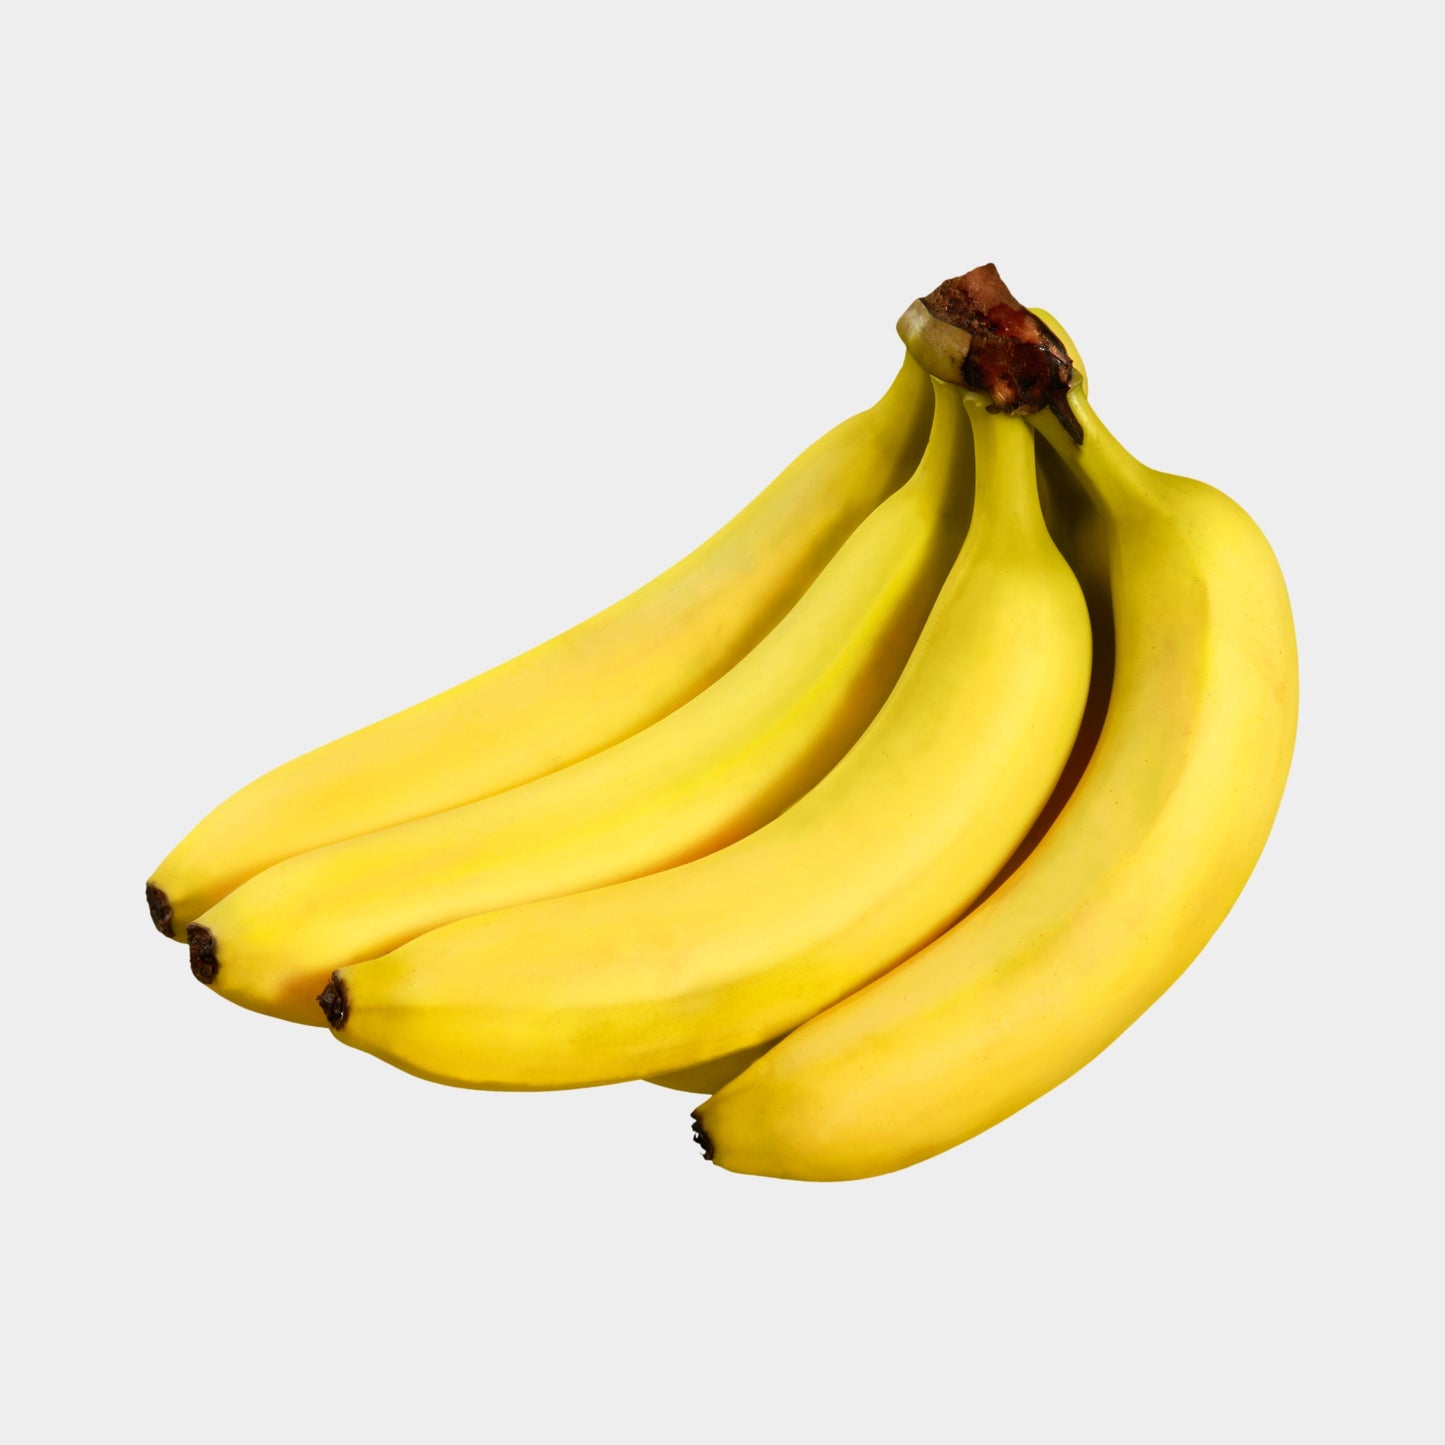 Bananes biologiques